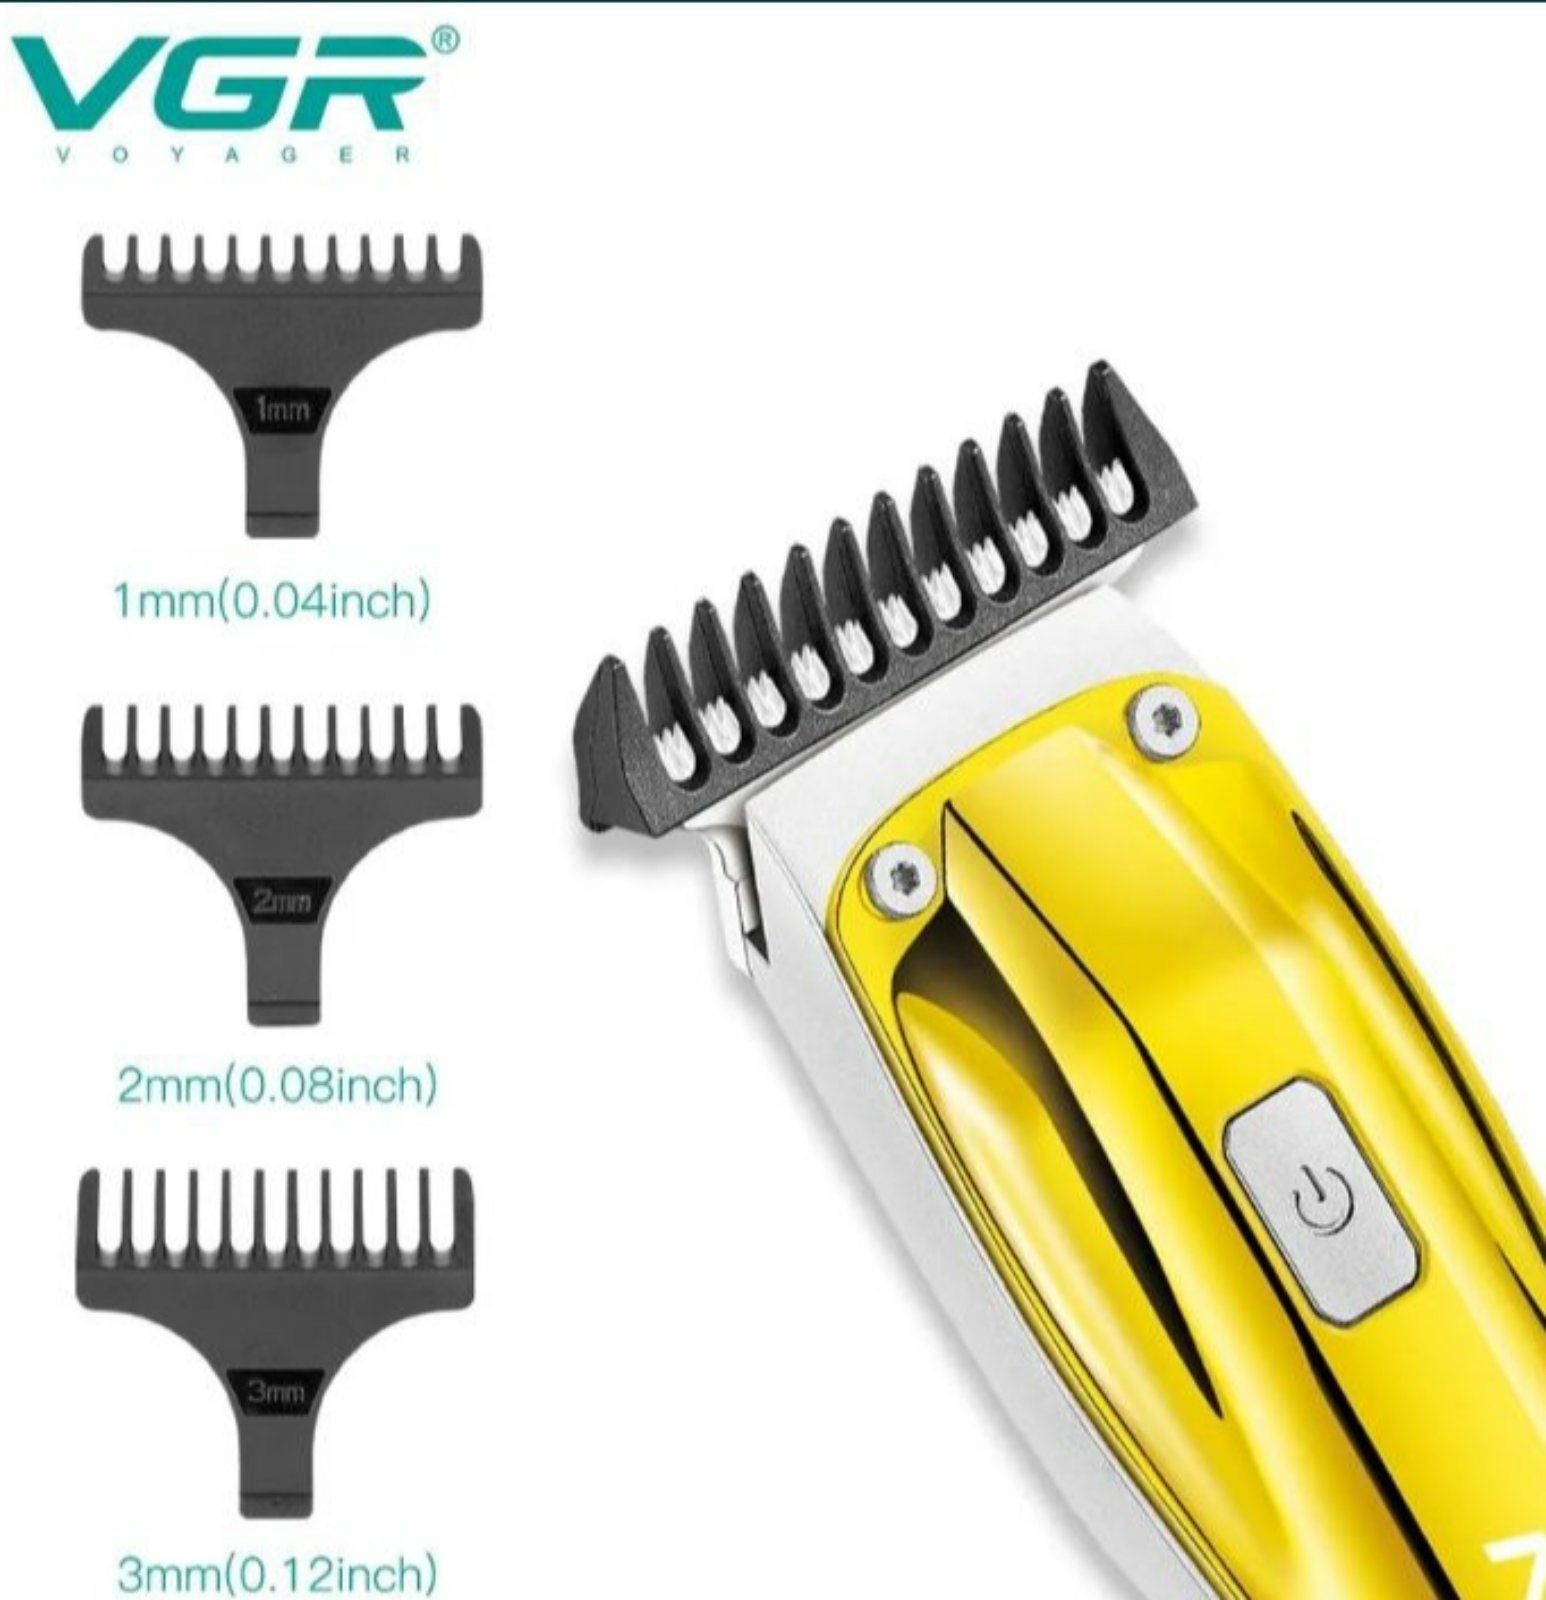 VGR машинка триммер для стрижки волос